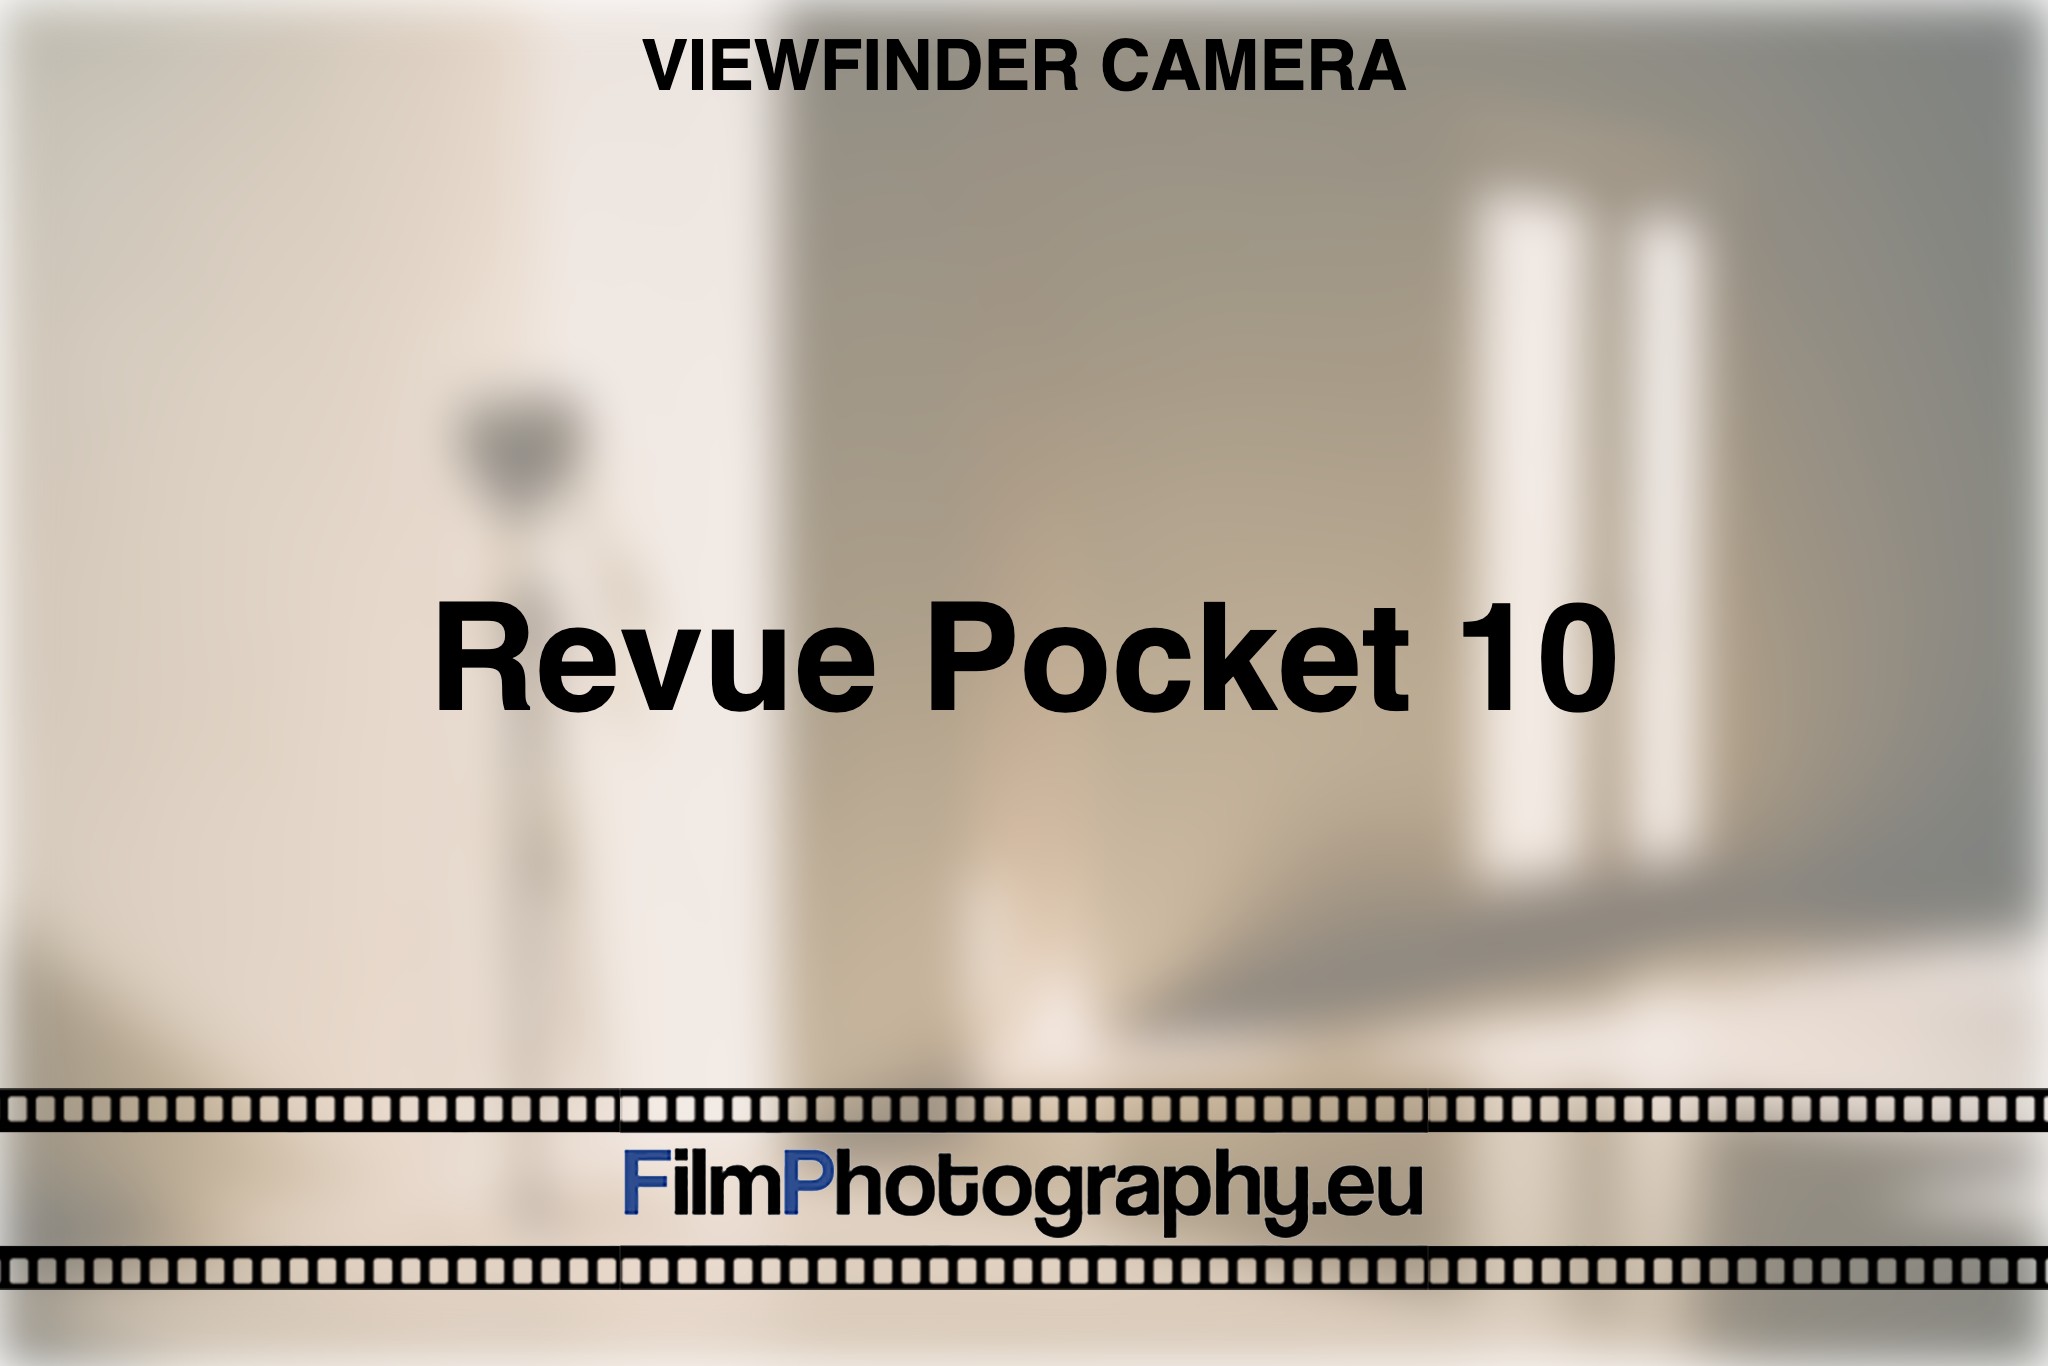 revue-pocket-10-viewfinder-camera-bnv